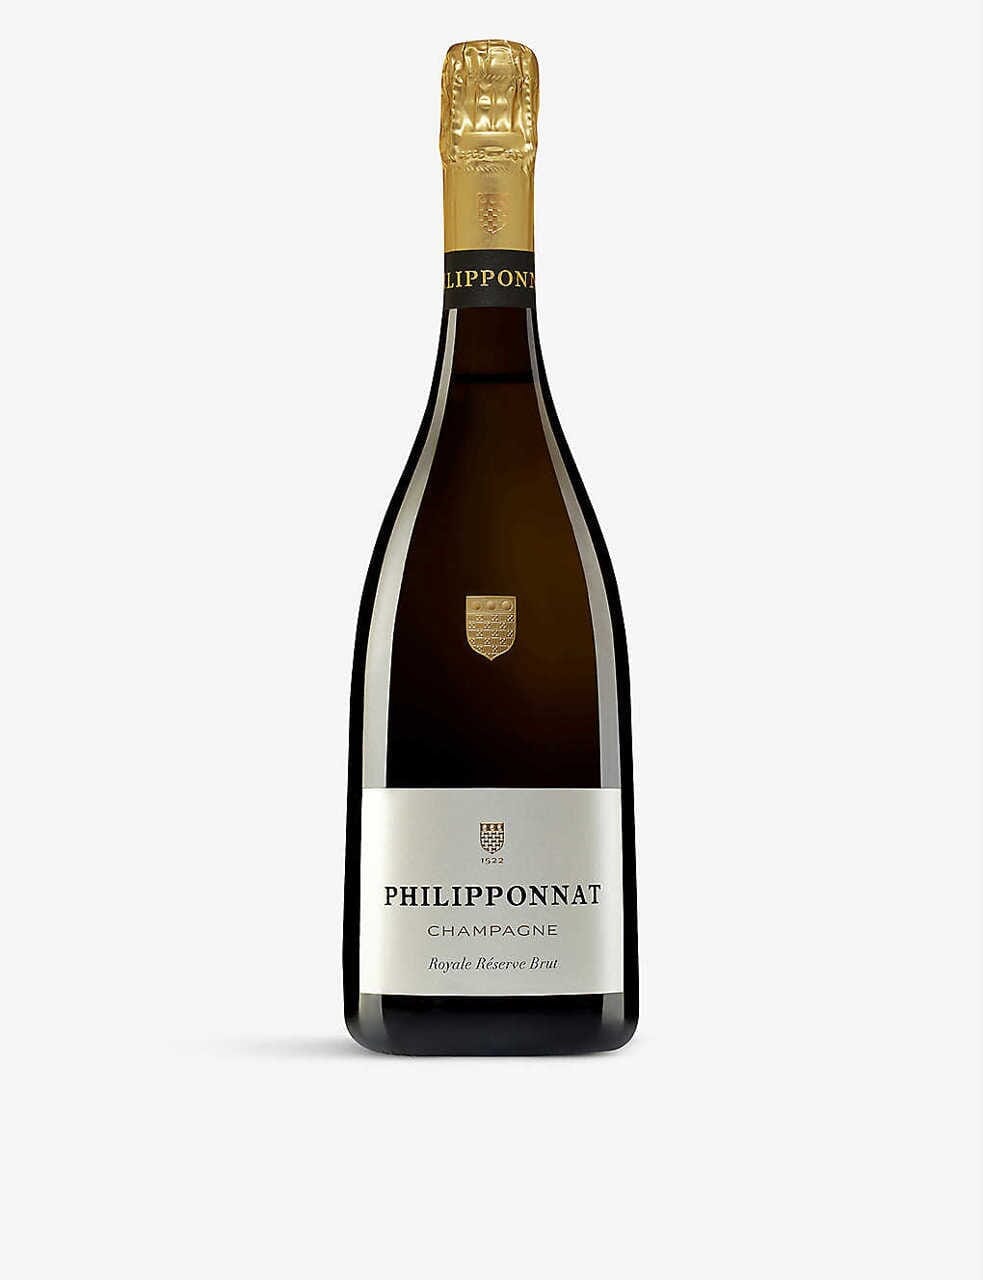 Philipponnat Royal Reserve Brut champagne champagne